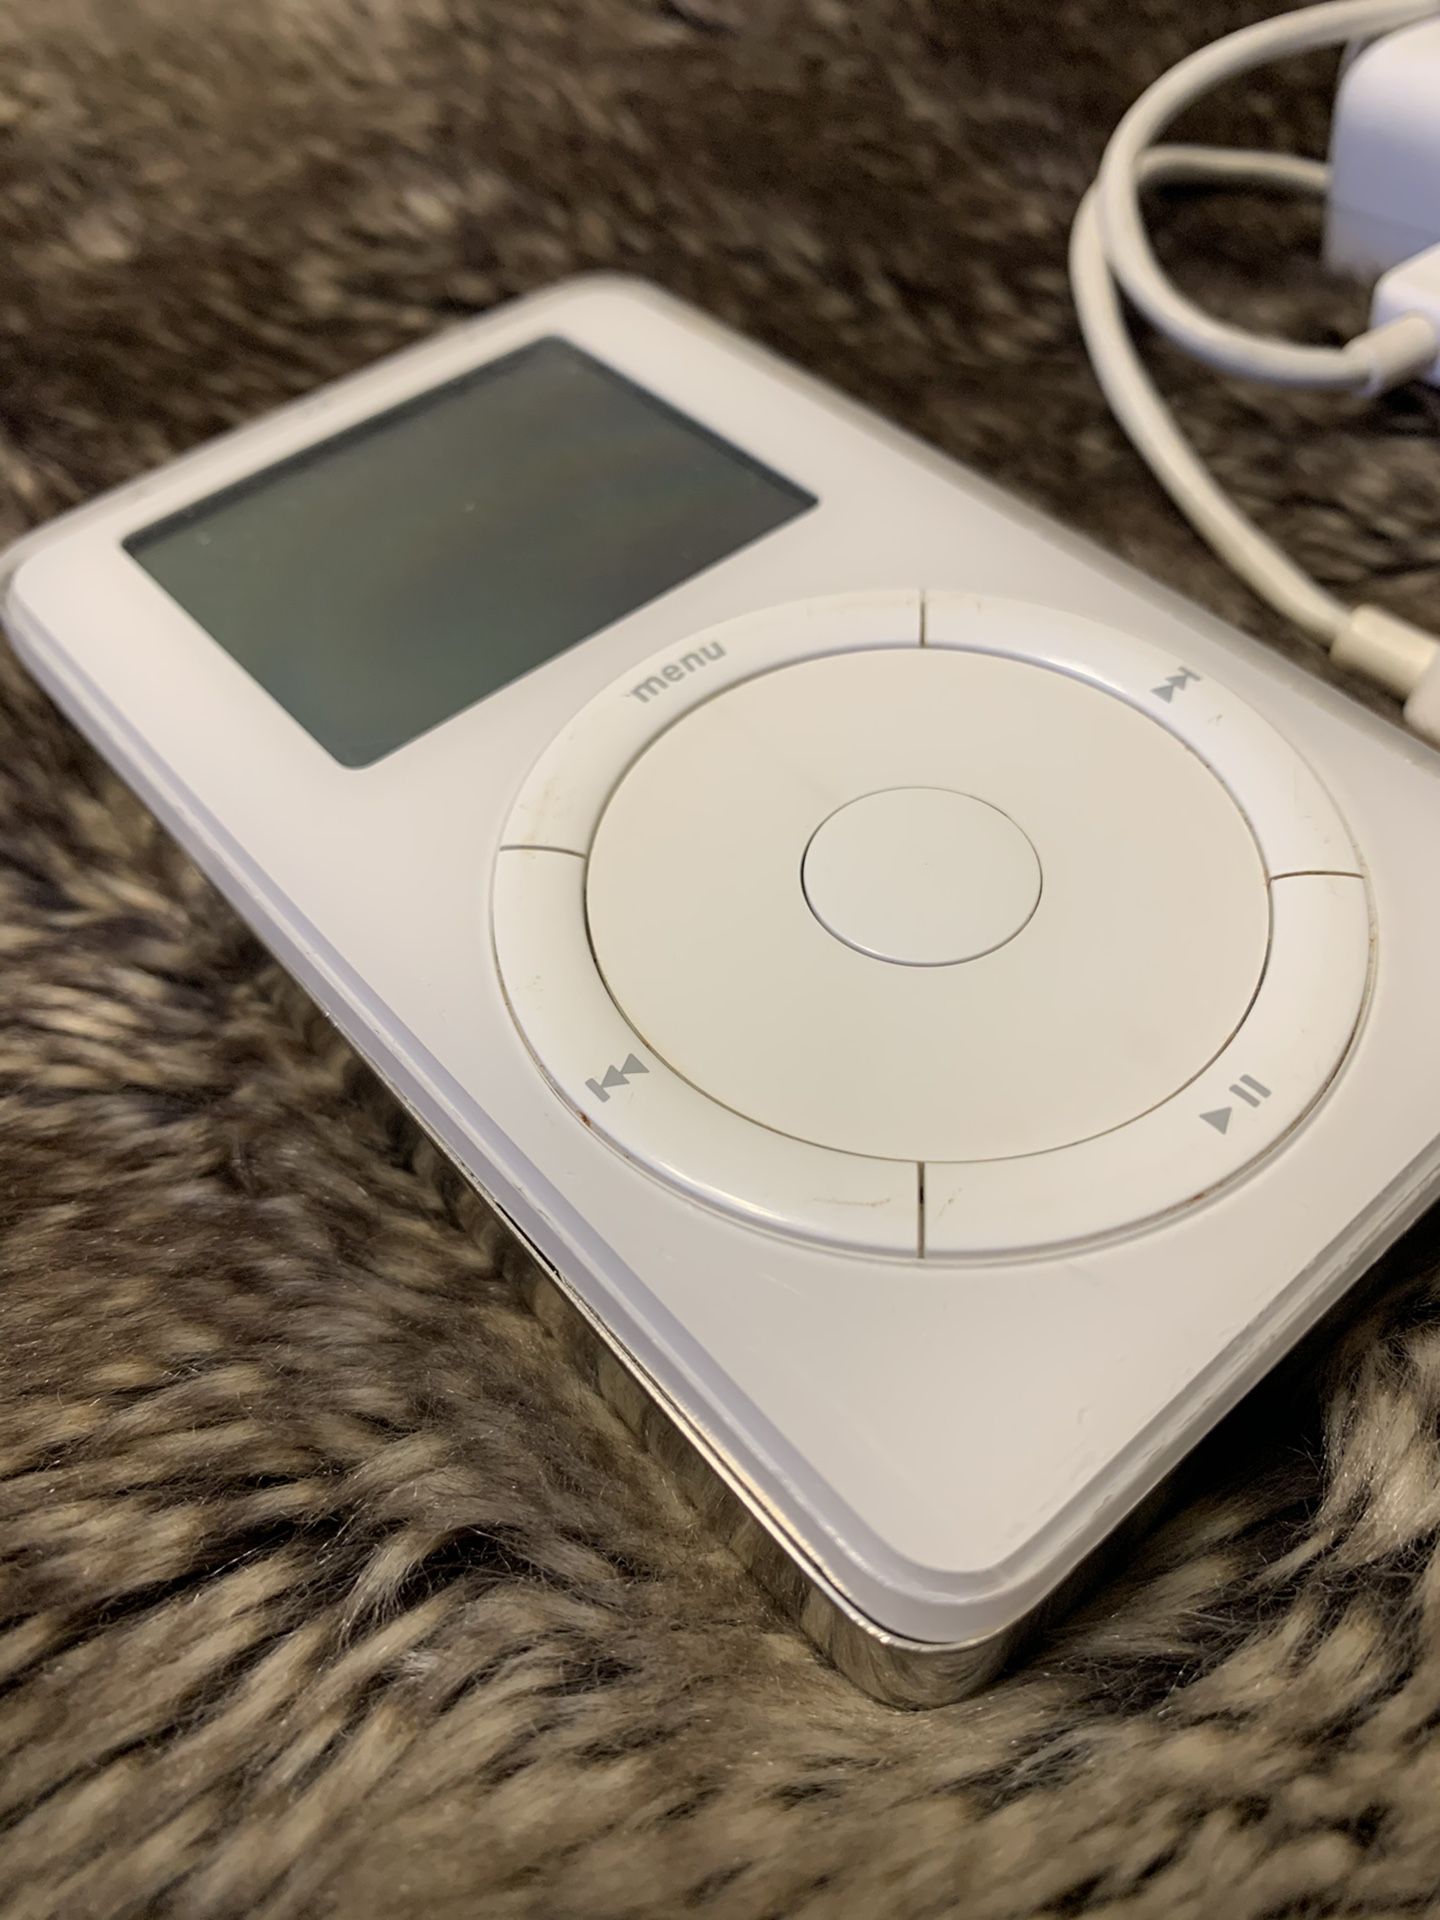 Apple iPod 2nd generation touch wheel 20GB (July 2002)